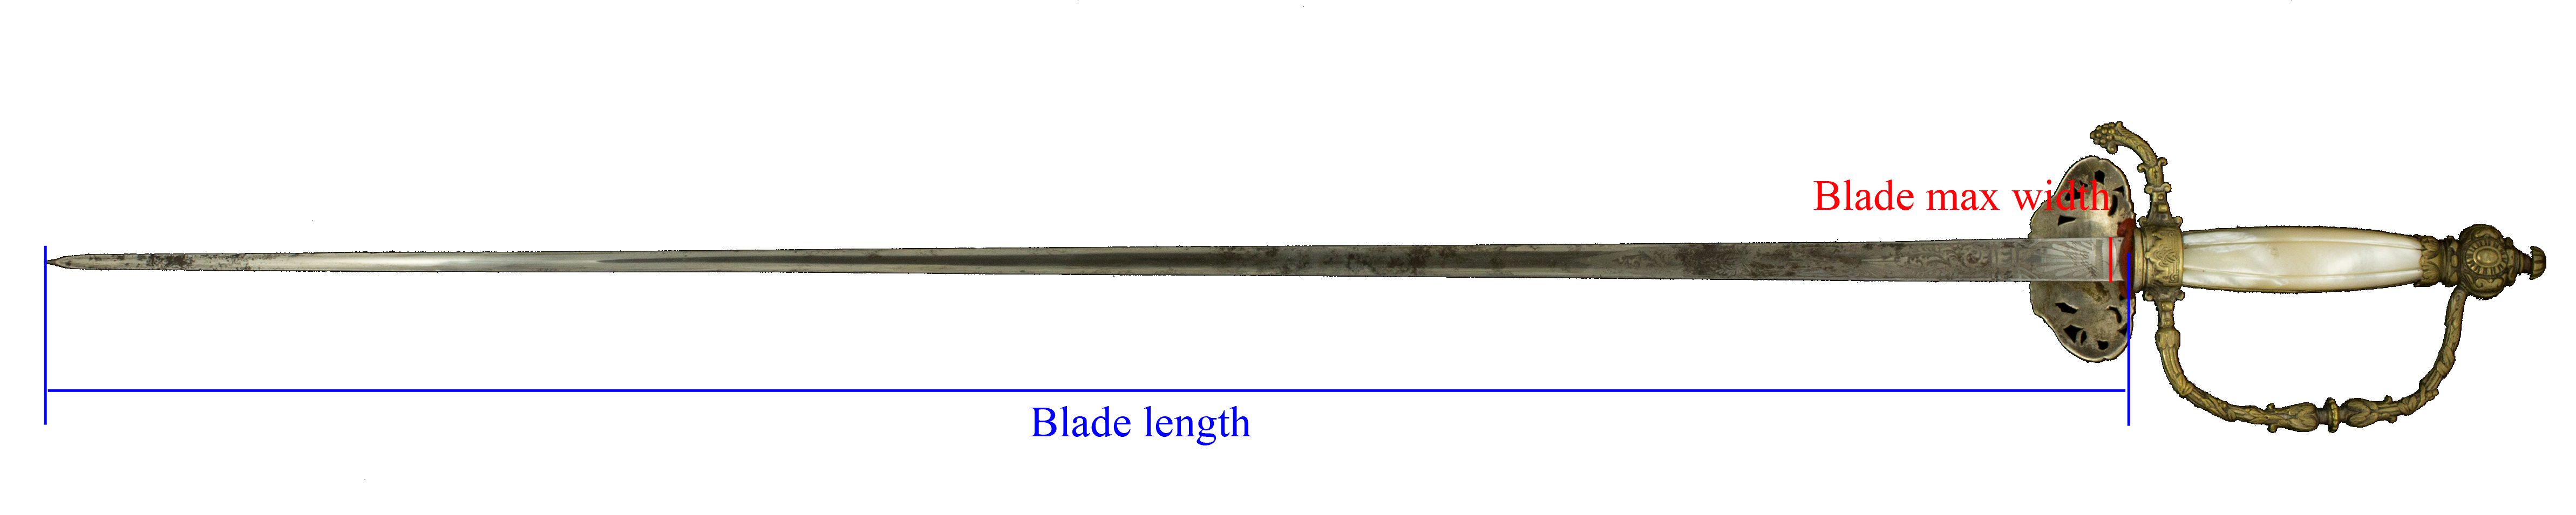 Blade width